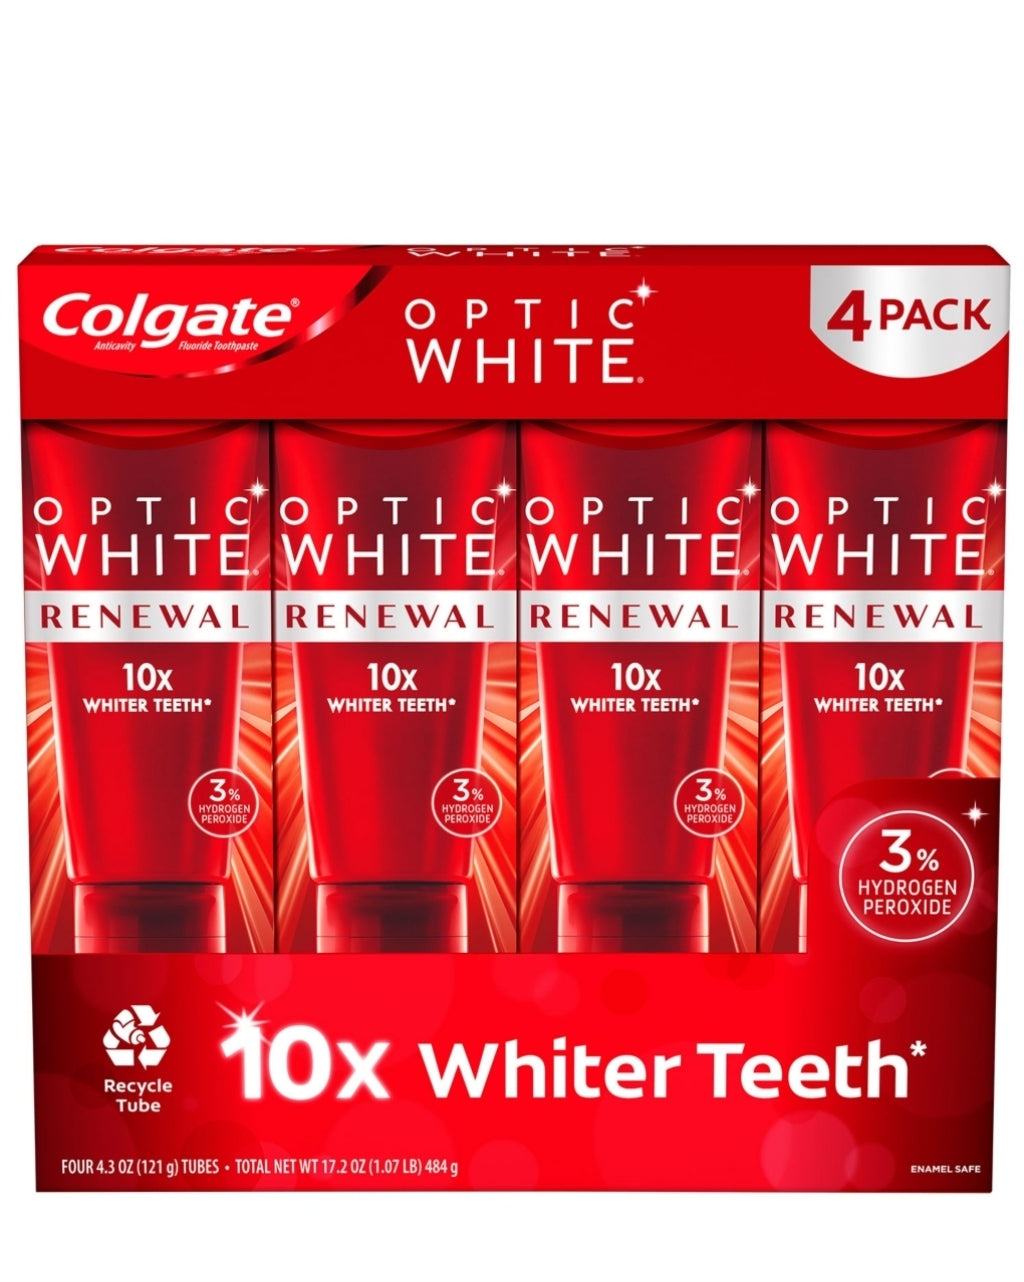 Crest 3D White Ultra Whitening Toothpaste Vivid Mint (5.2 oz 5 pk.)